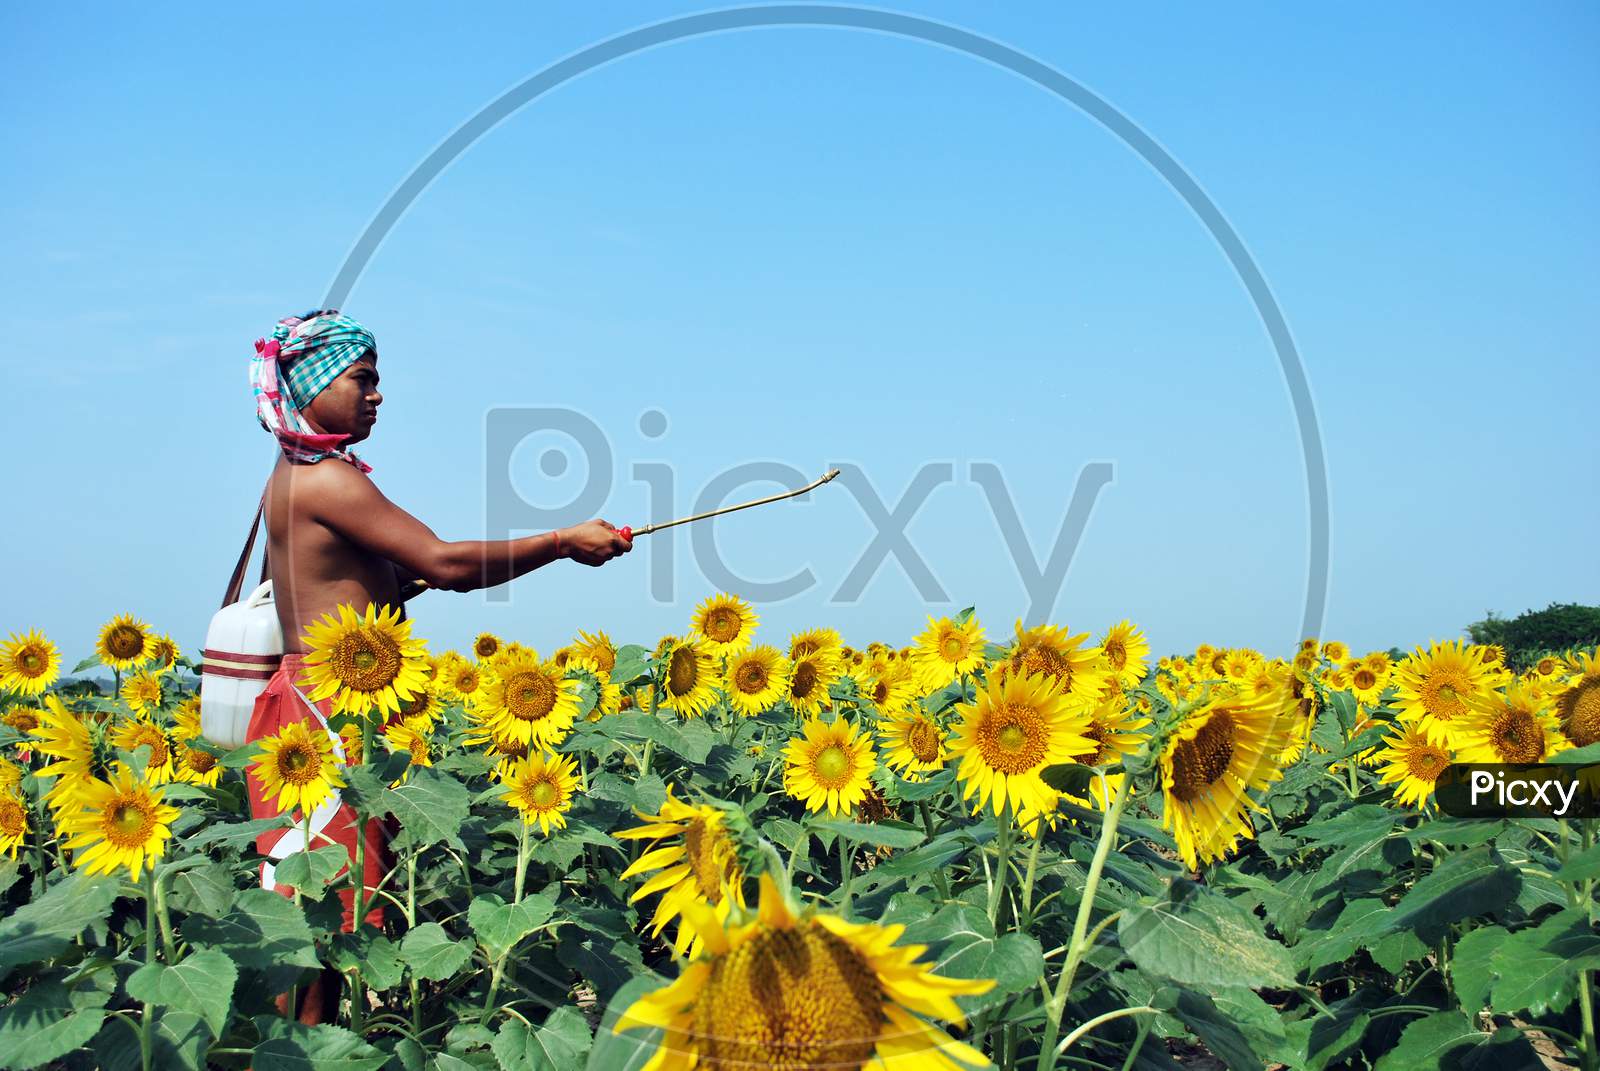 flower farmer spraying pesticide